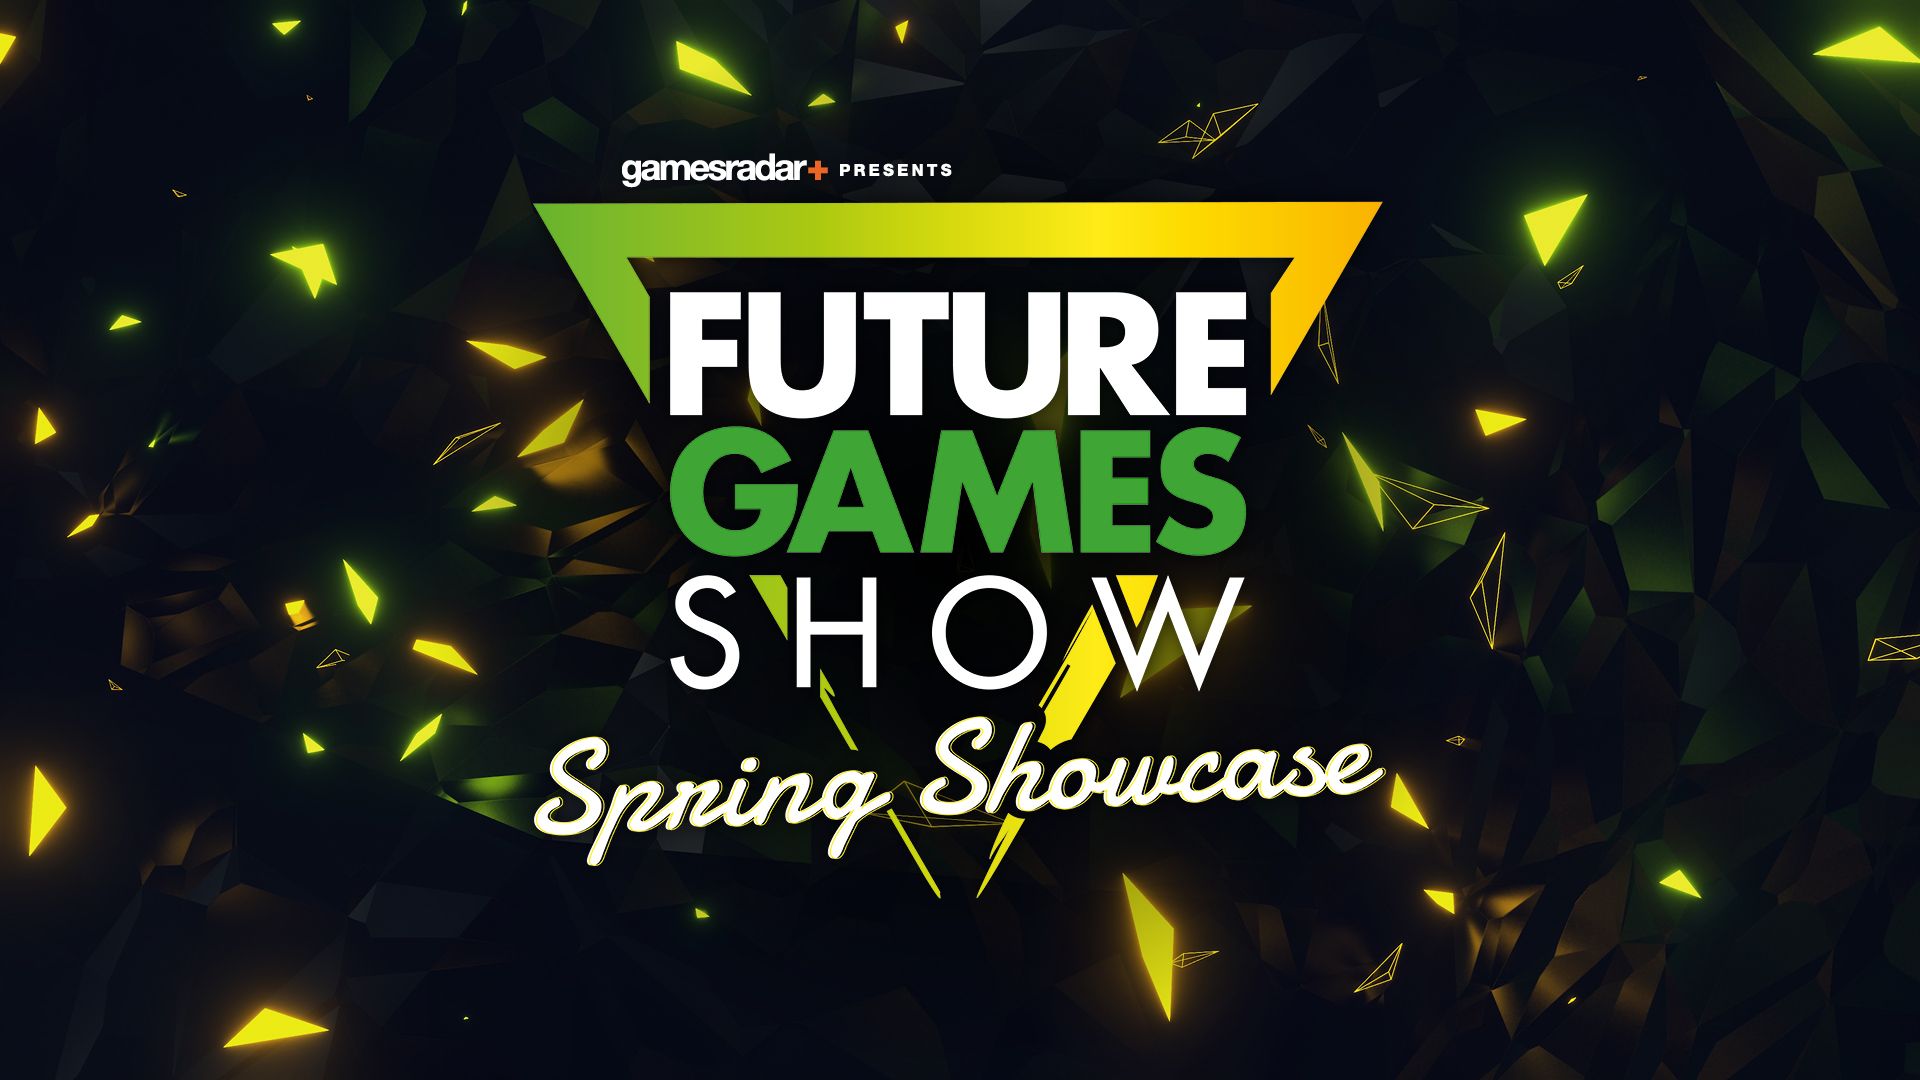 Future games show